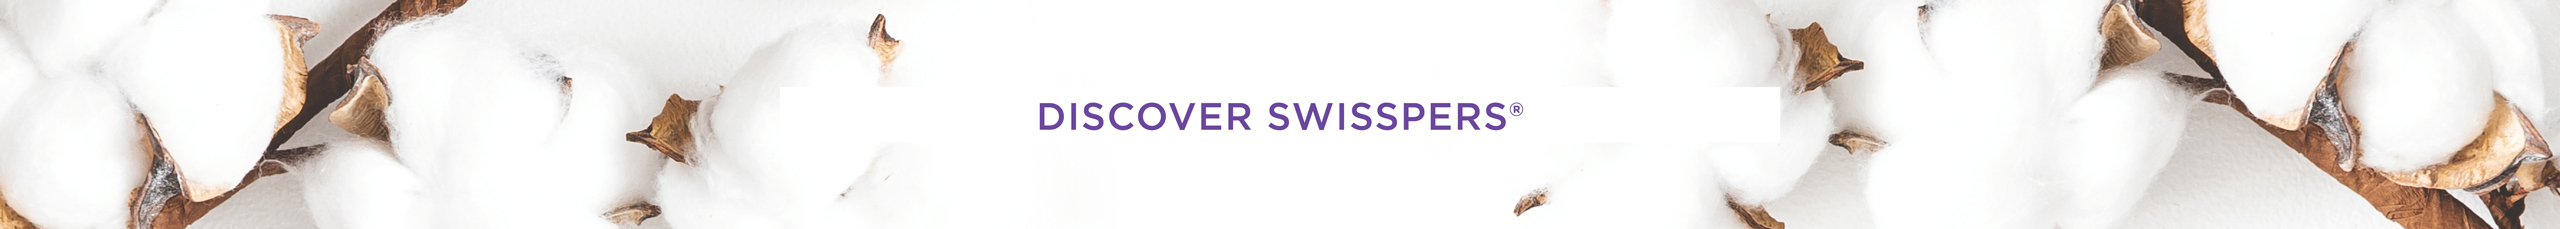 Discover Swisspers